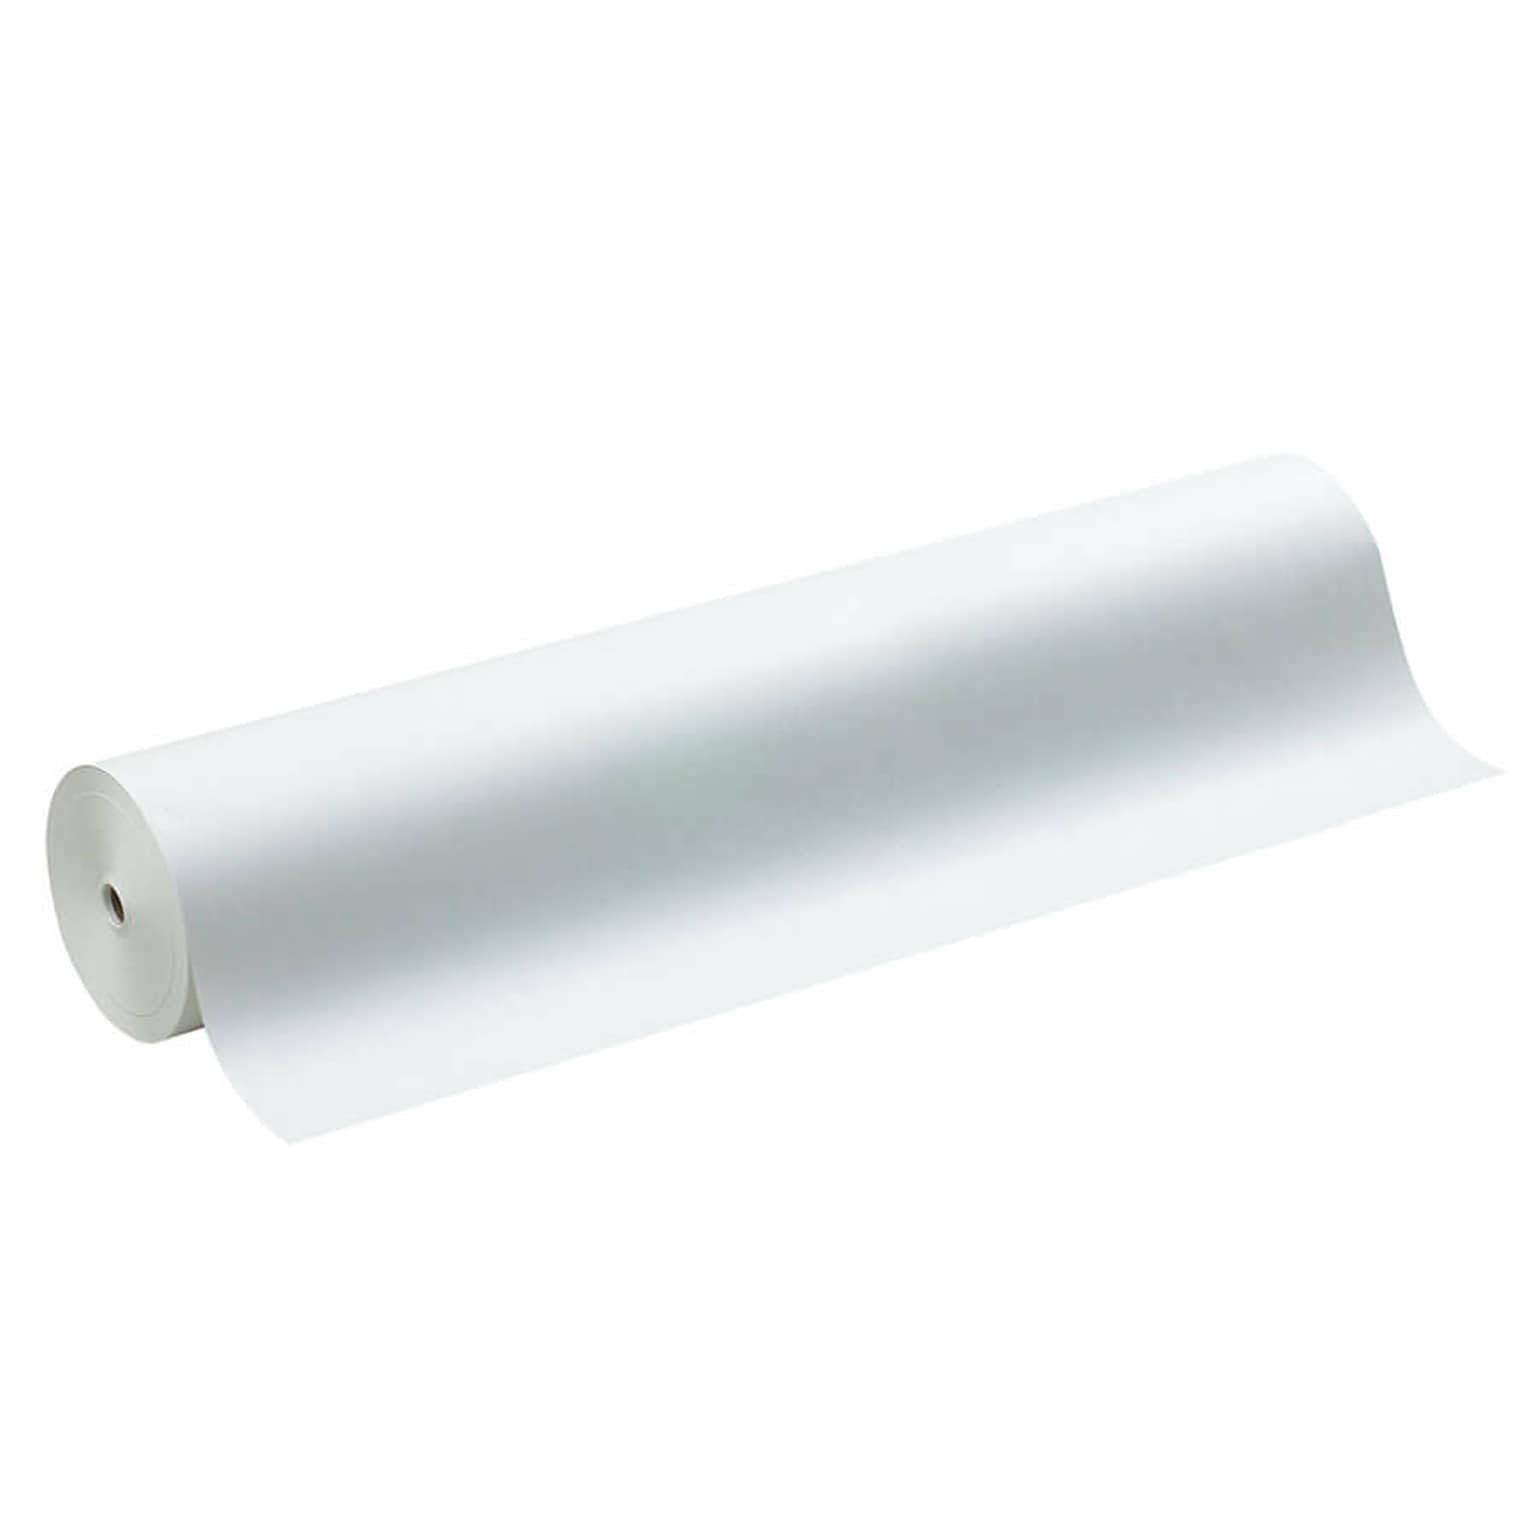 Pacon Lightweight Kraft Paper Roll, 48 x 1,000, White, 1 Roll (PAC5648)